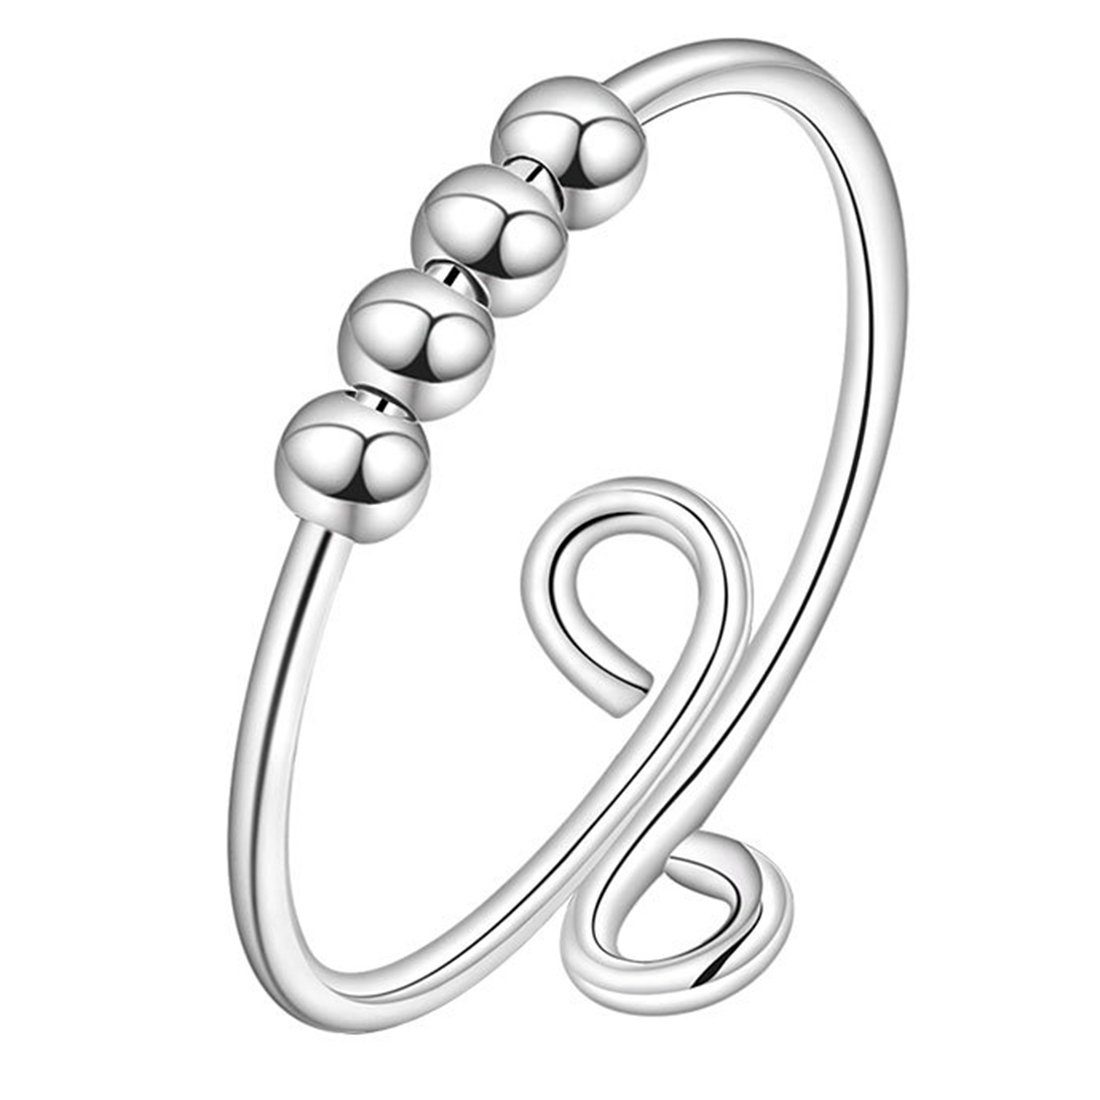 Haiaveng Fingerring S925 Silber Anti Angst Ringe,Damen mit Perlen Band Ring, Verstellbare Ringe,Schwenkring zur Spannungsentlastung